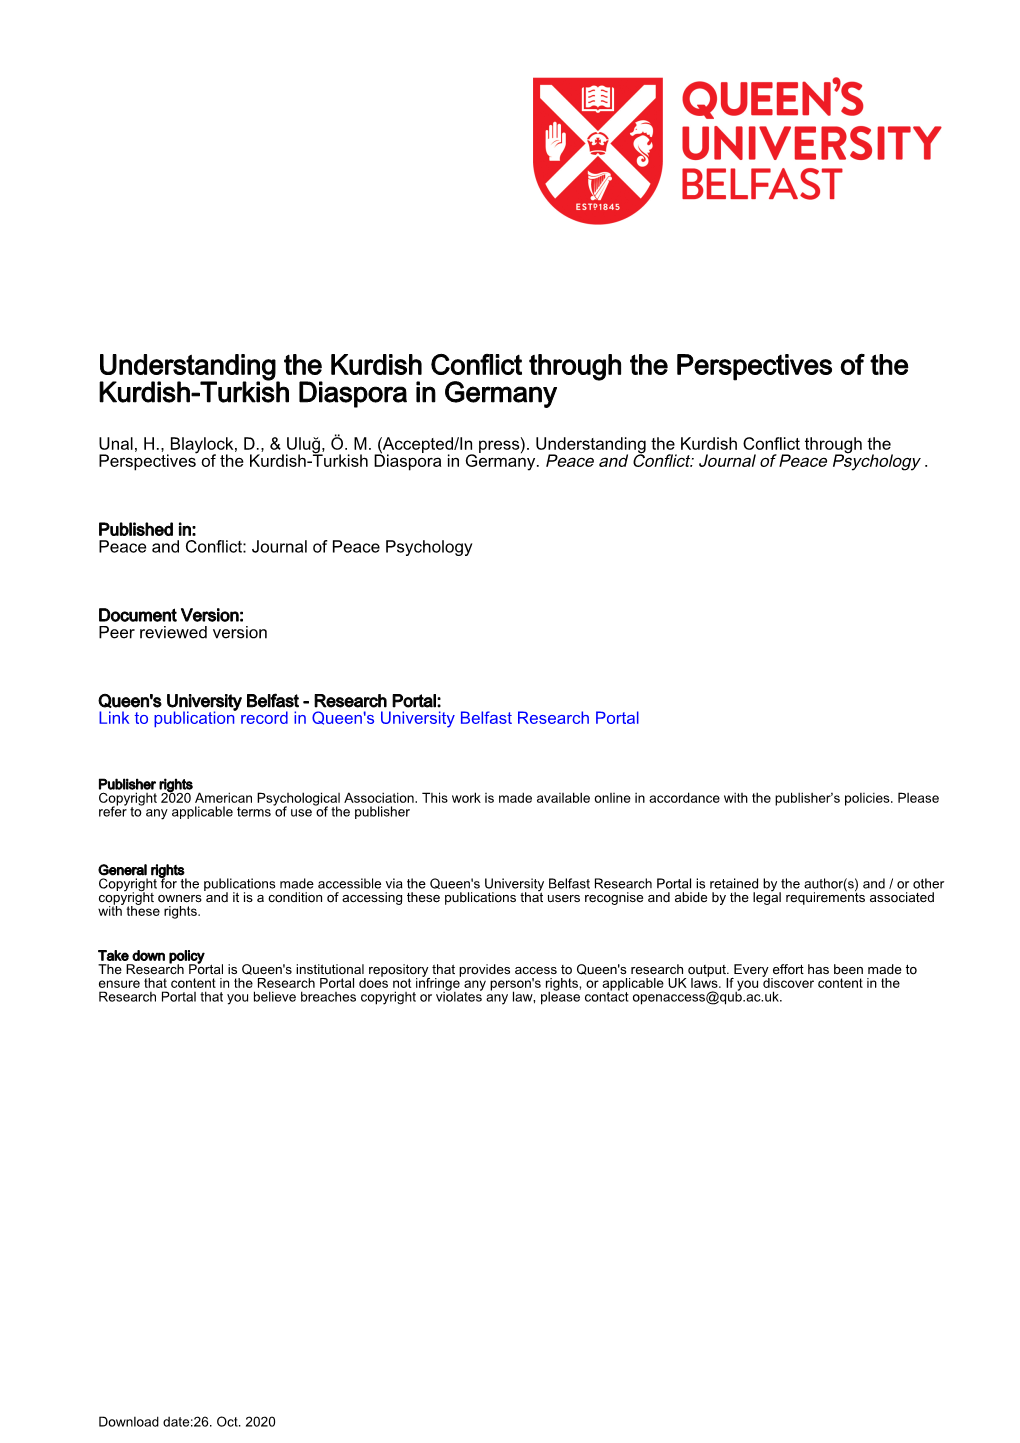 Understanding the Kurdish Conflict Through the Perspectives of the Kurdish-Turkish Diaspora in Germany